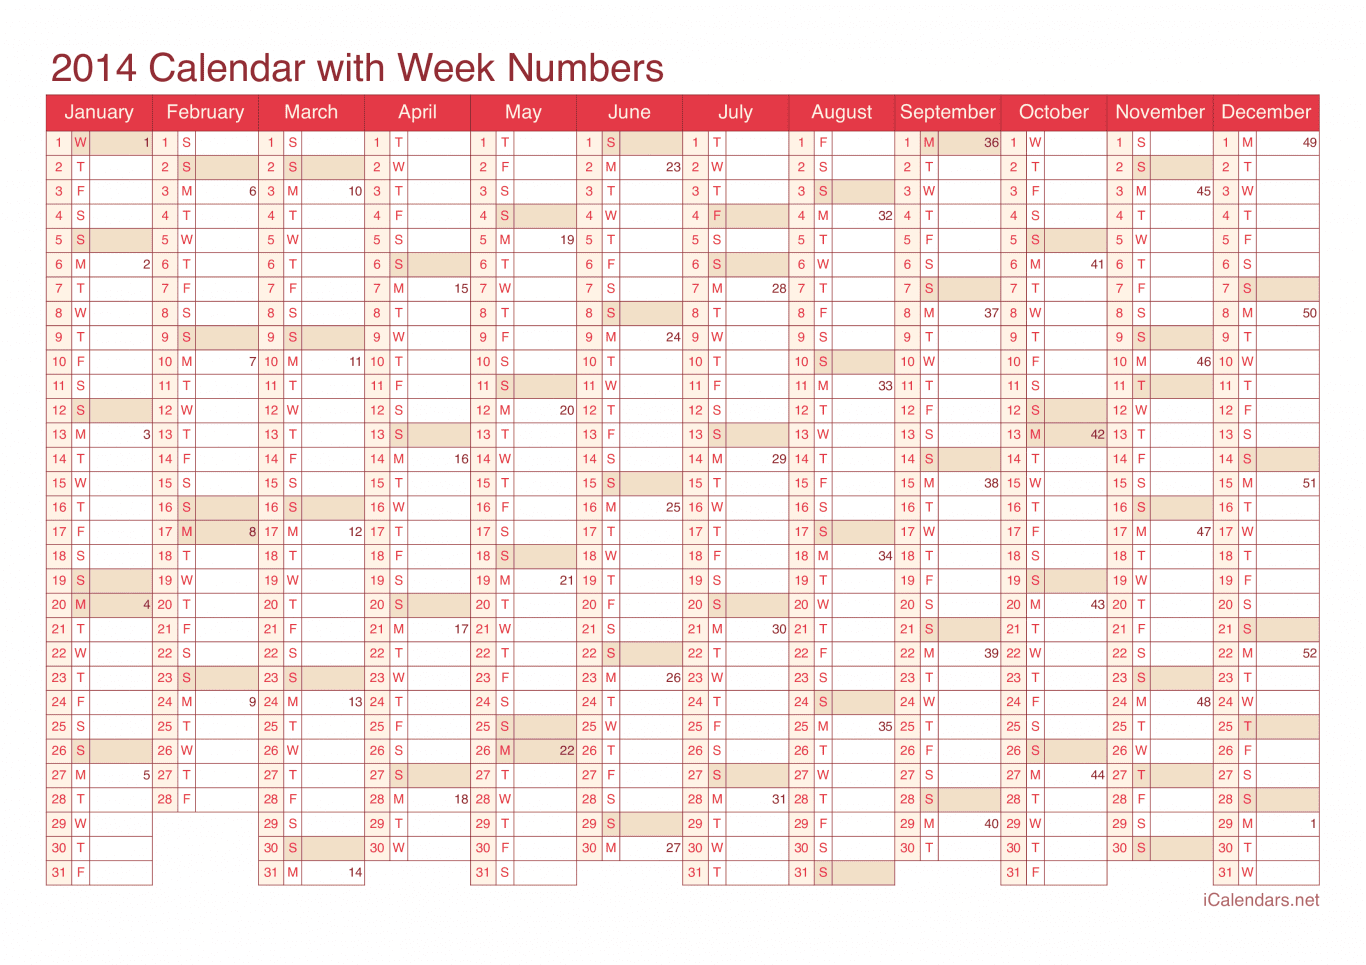 2014 Calendar with week numbers - Cherry